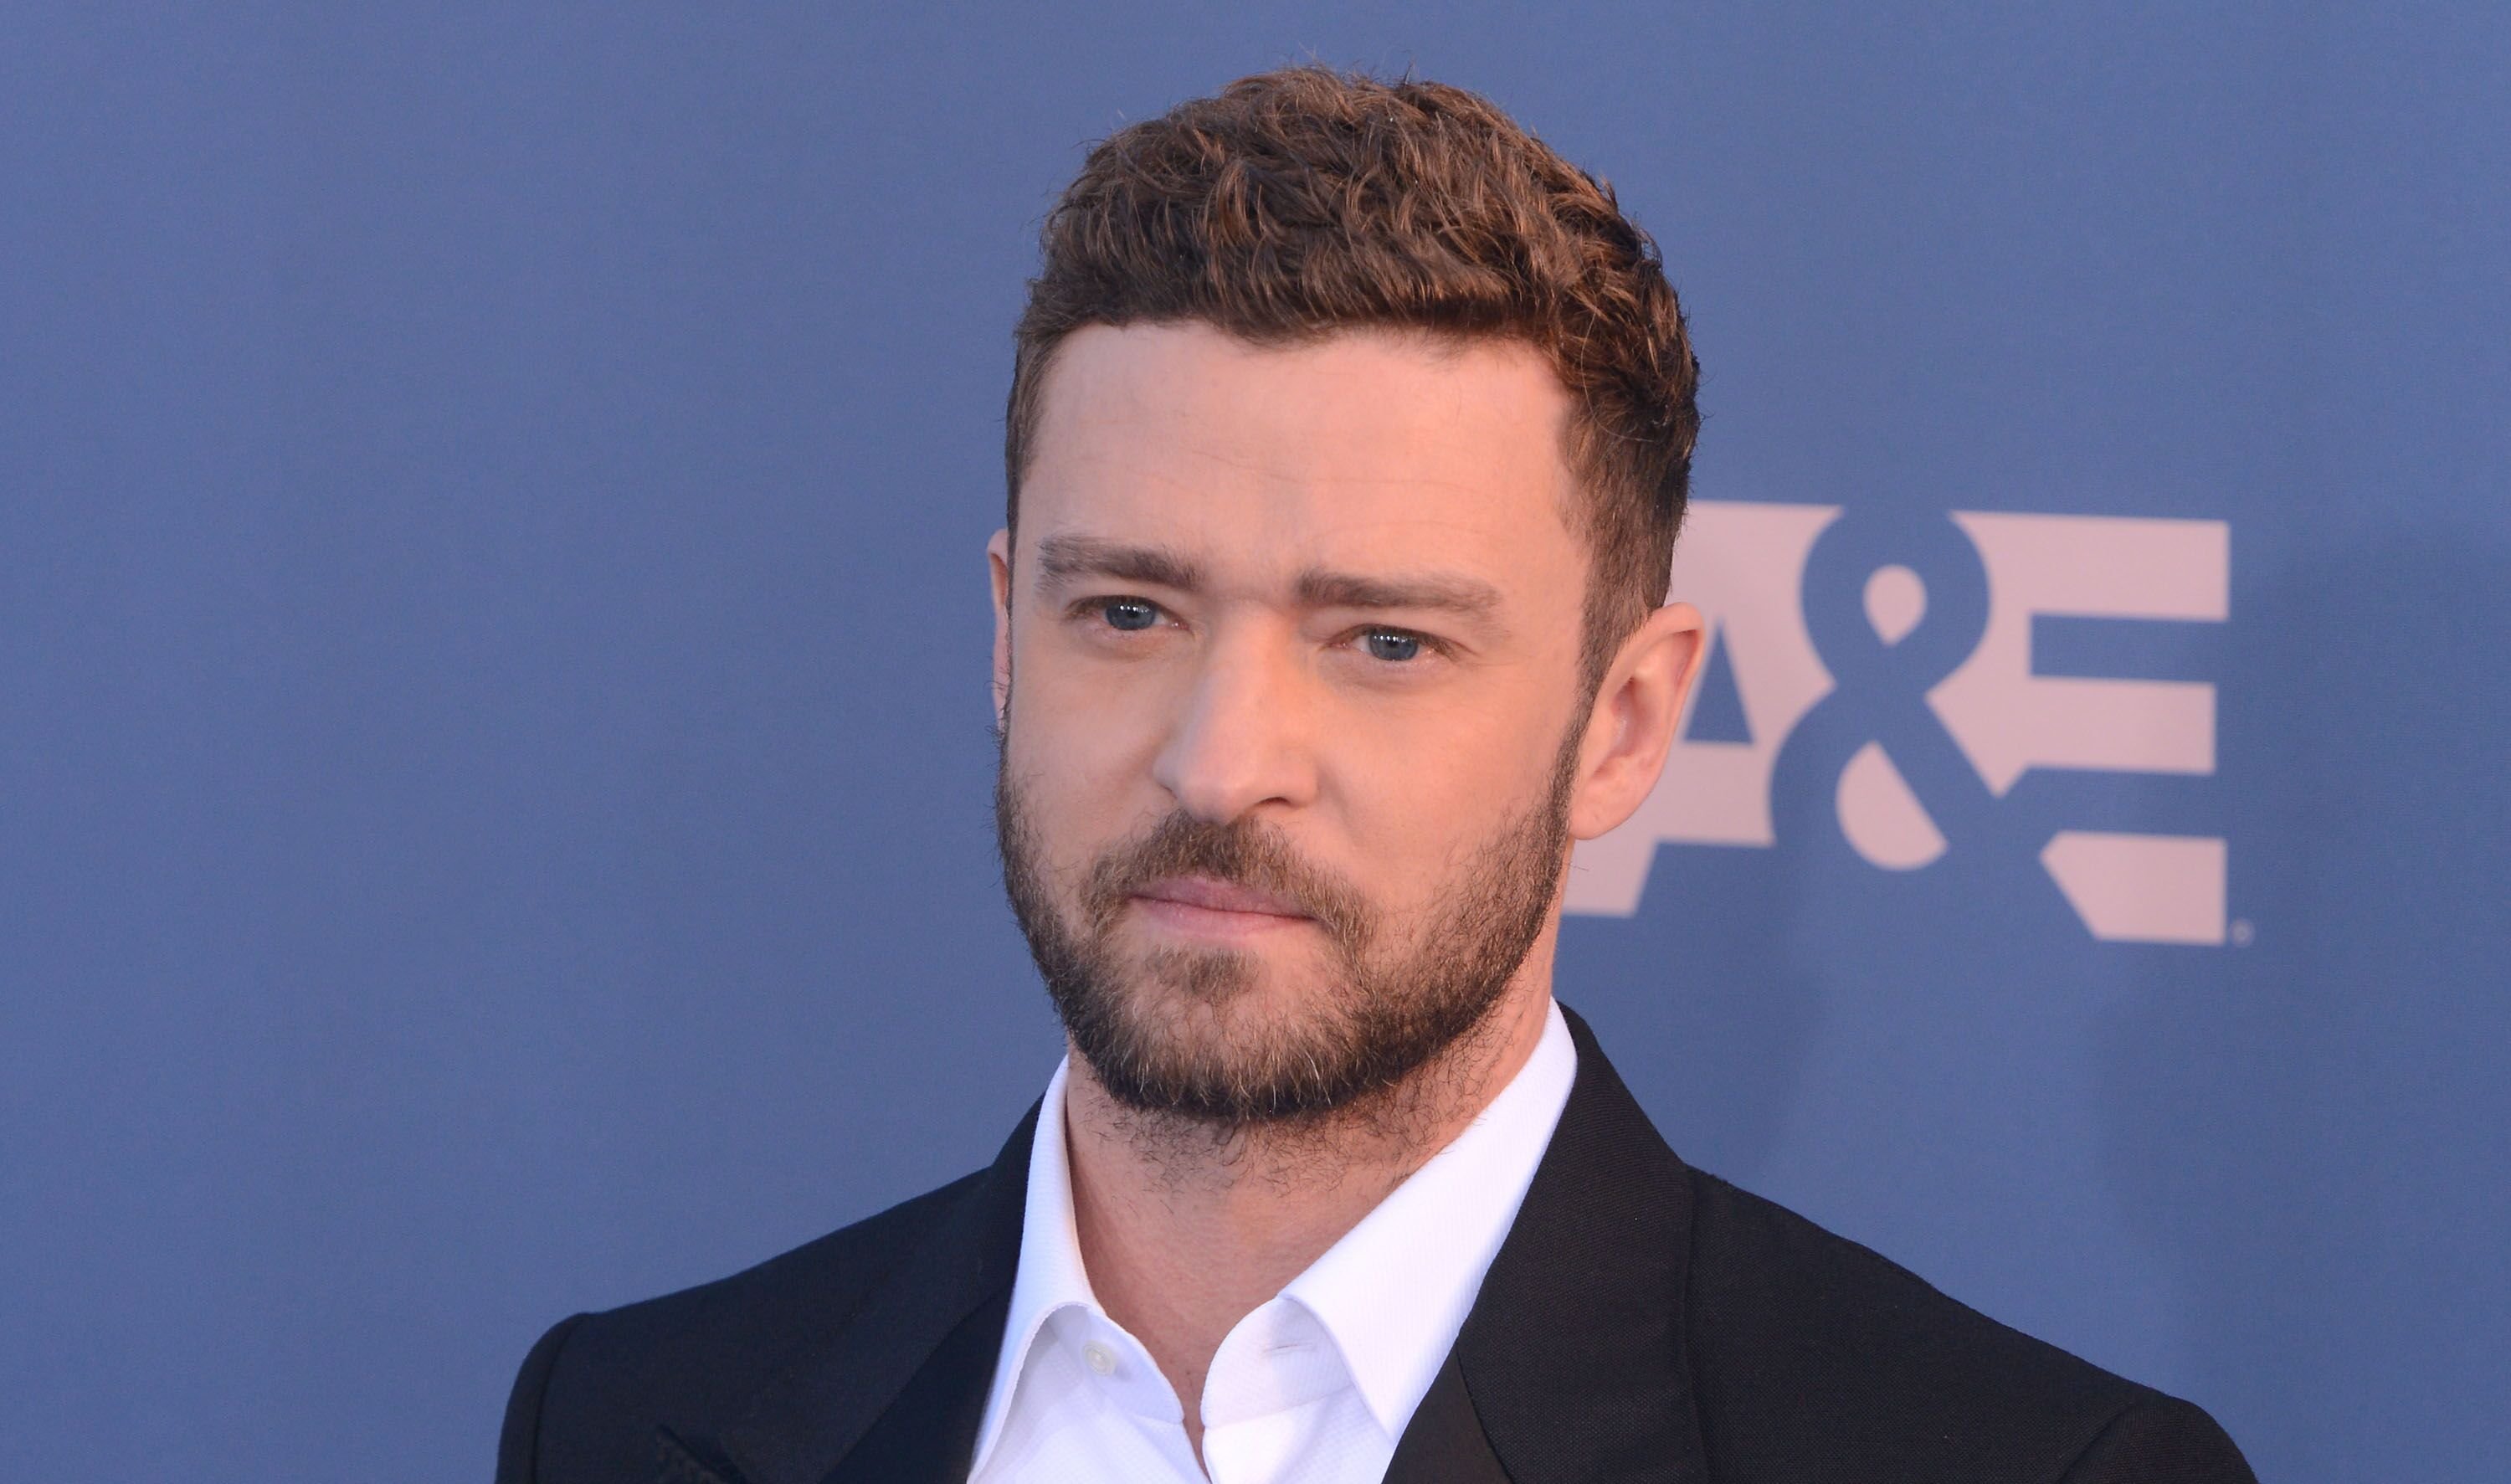 Justin Timberlake arrives at The 22nd Annual Critics' Choice Awards at Barker Hangar in Santa Monica, California. | Photo: Getty Images